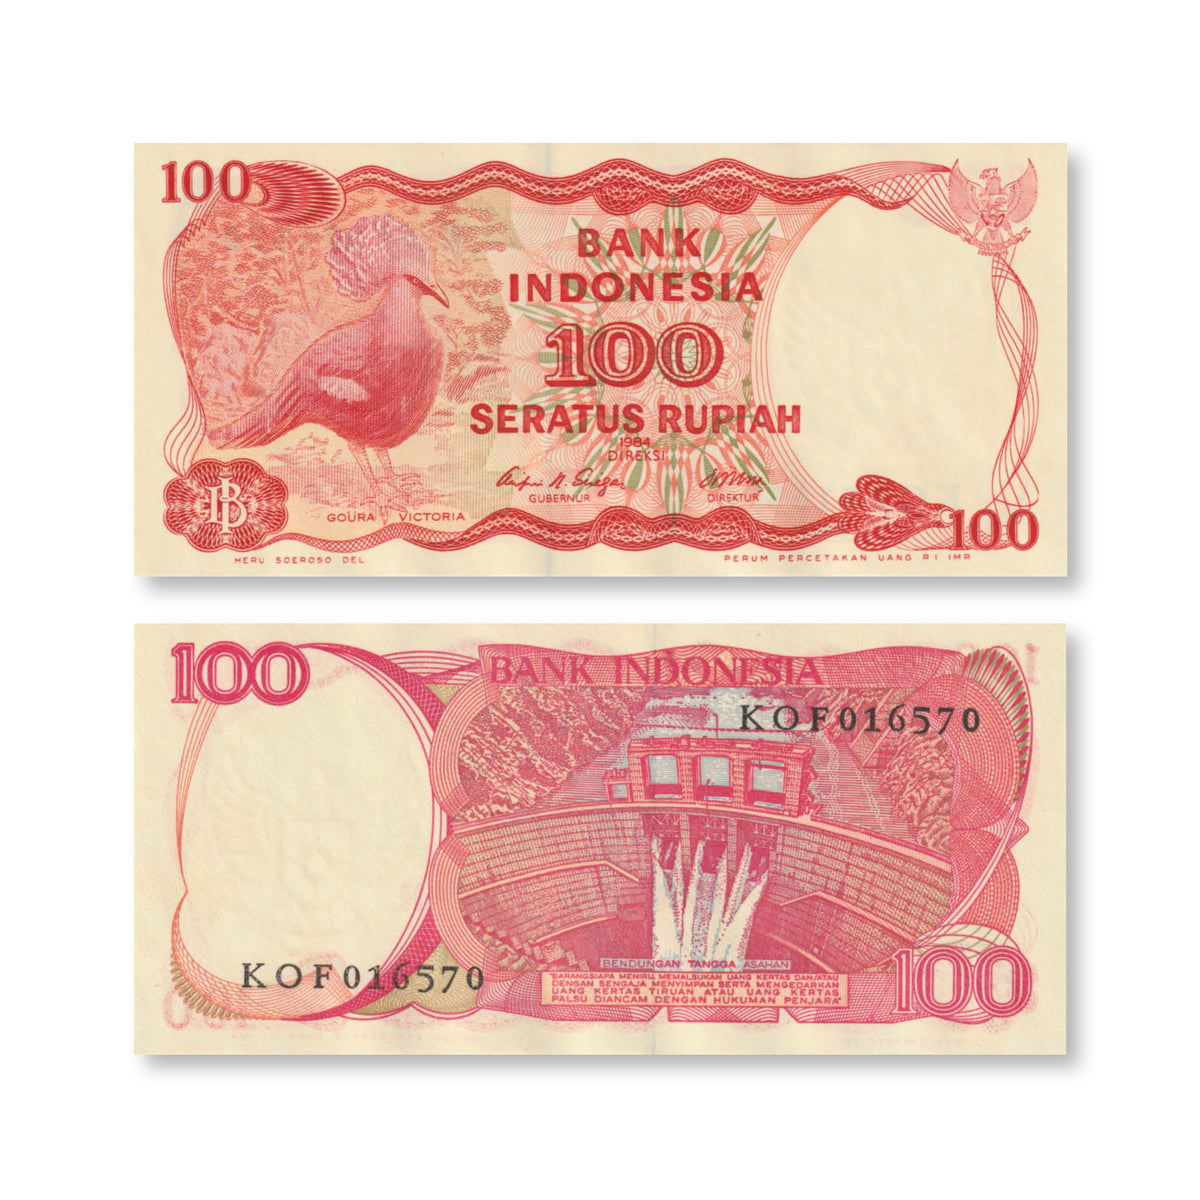 Indonesia 100 Rupiah, 1984, B580a, P122a, UNC - Robert's World Money - World Banknotes